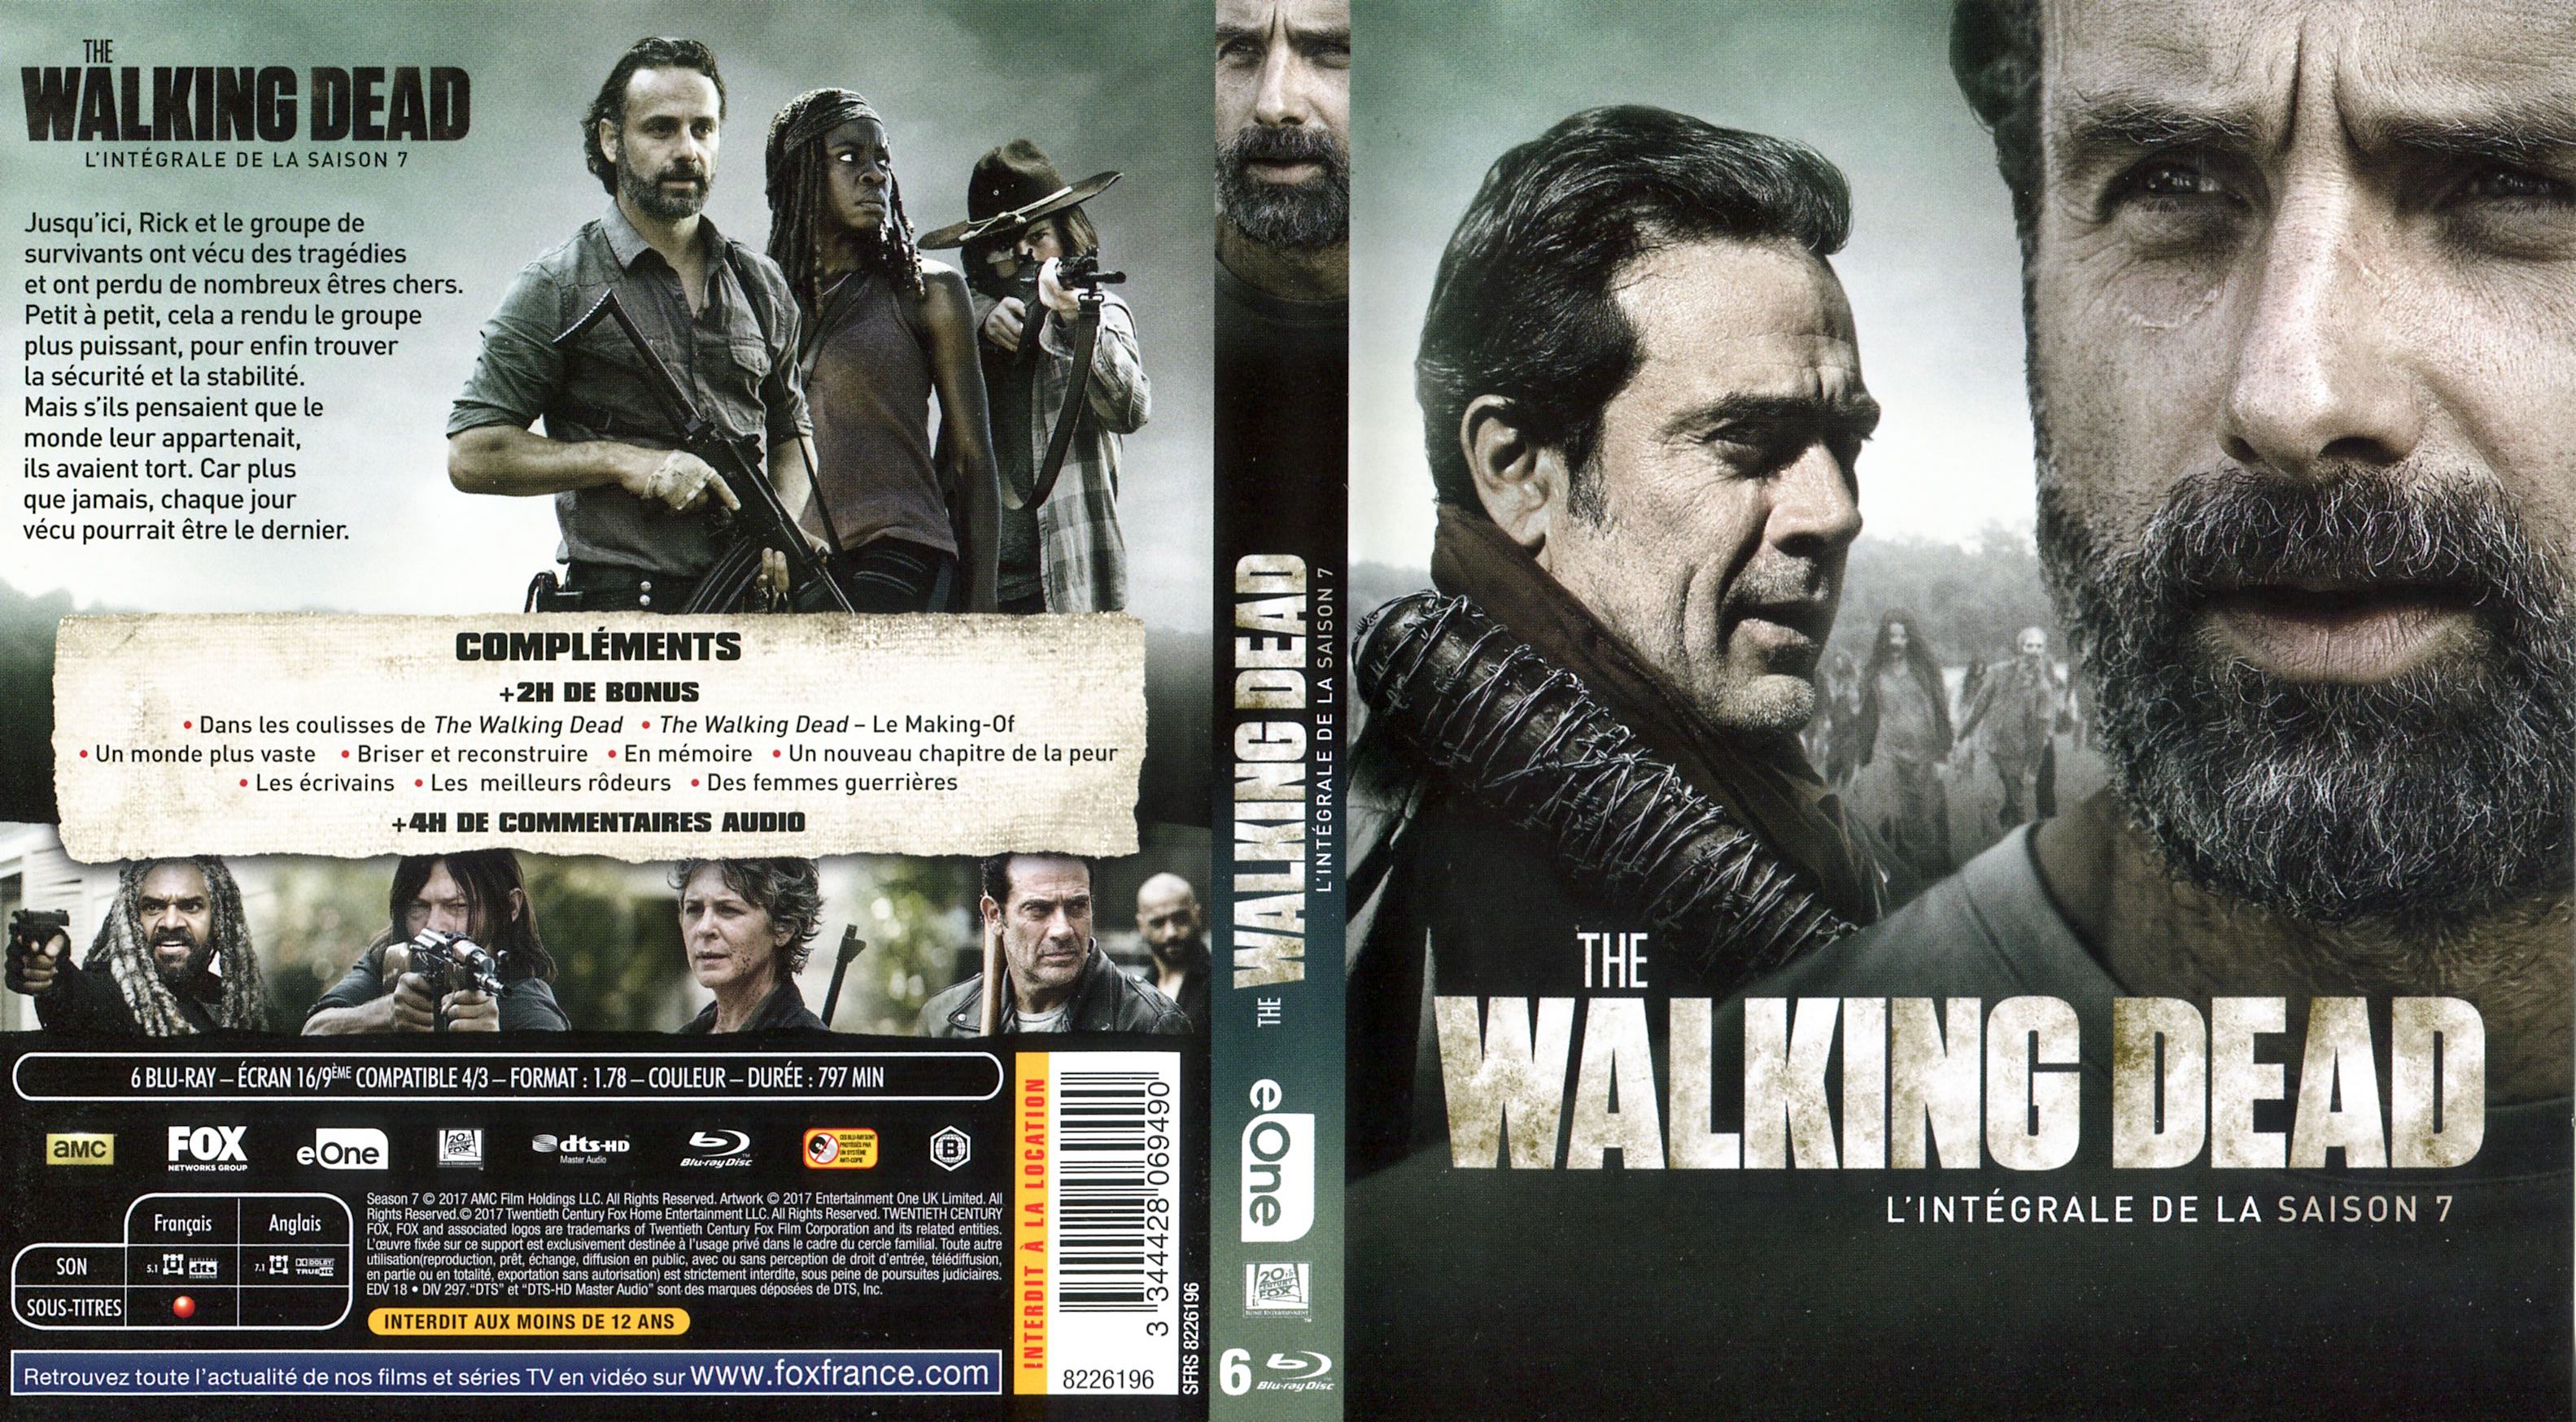 Jaquette DVD The Walking Dead Saison 7 (BLU-RAY)